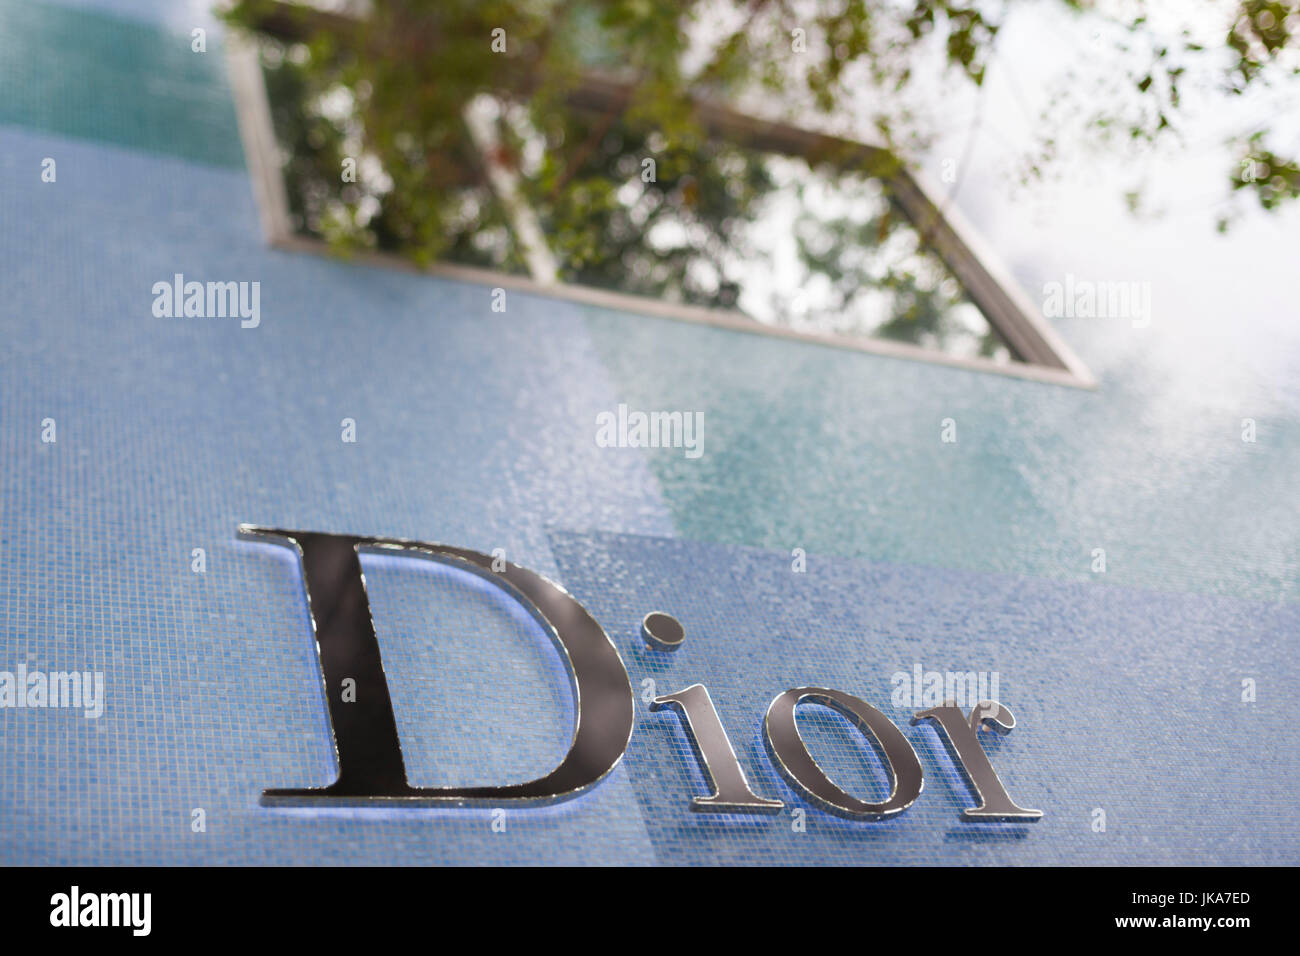 USA, Florida, Miami, Miami Design District, Dior, store front Banque D'Images